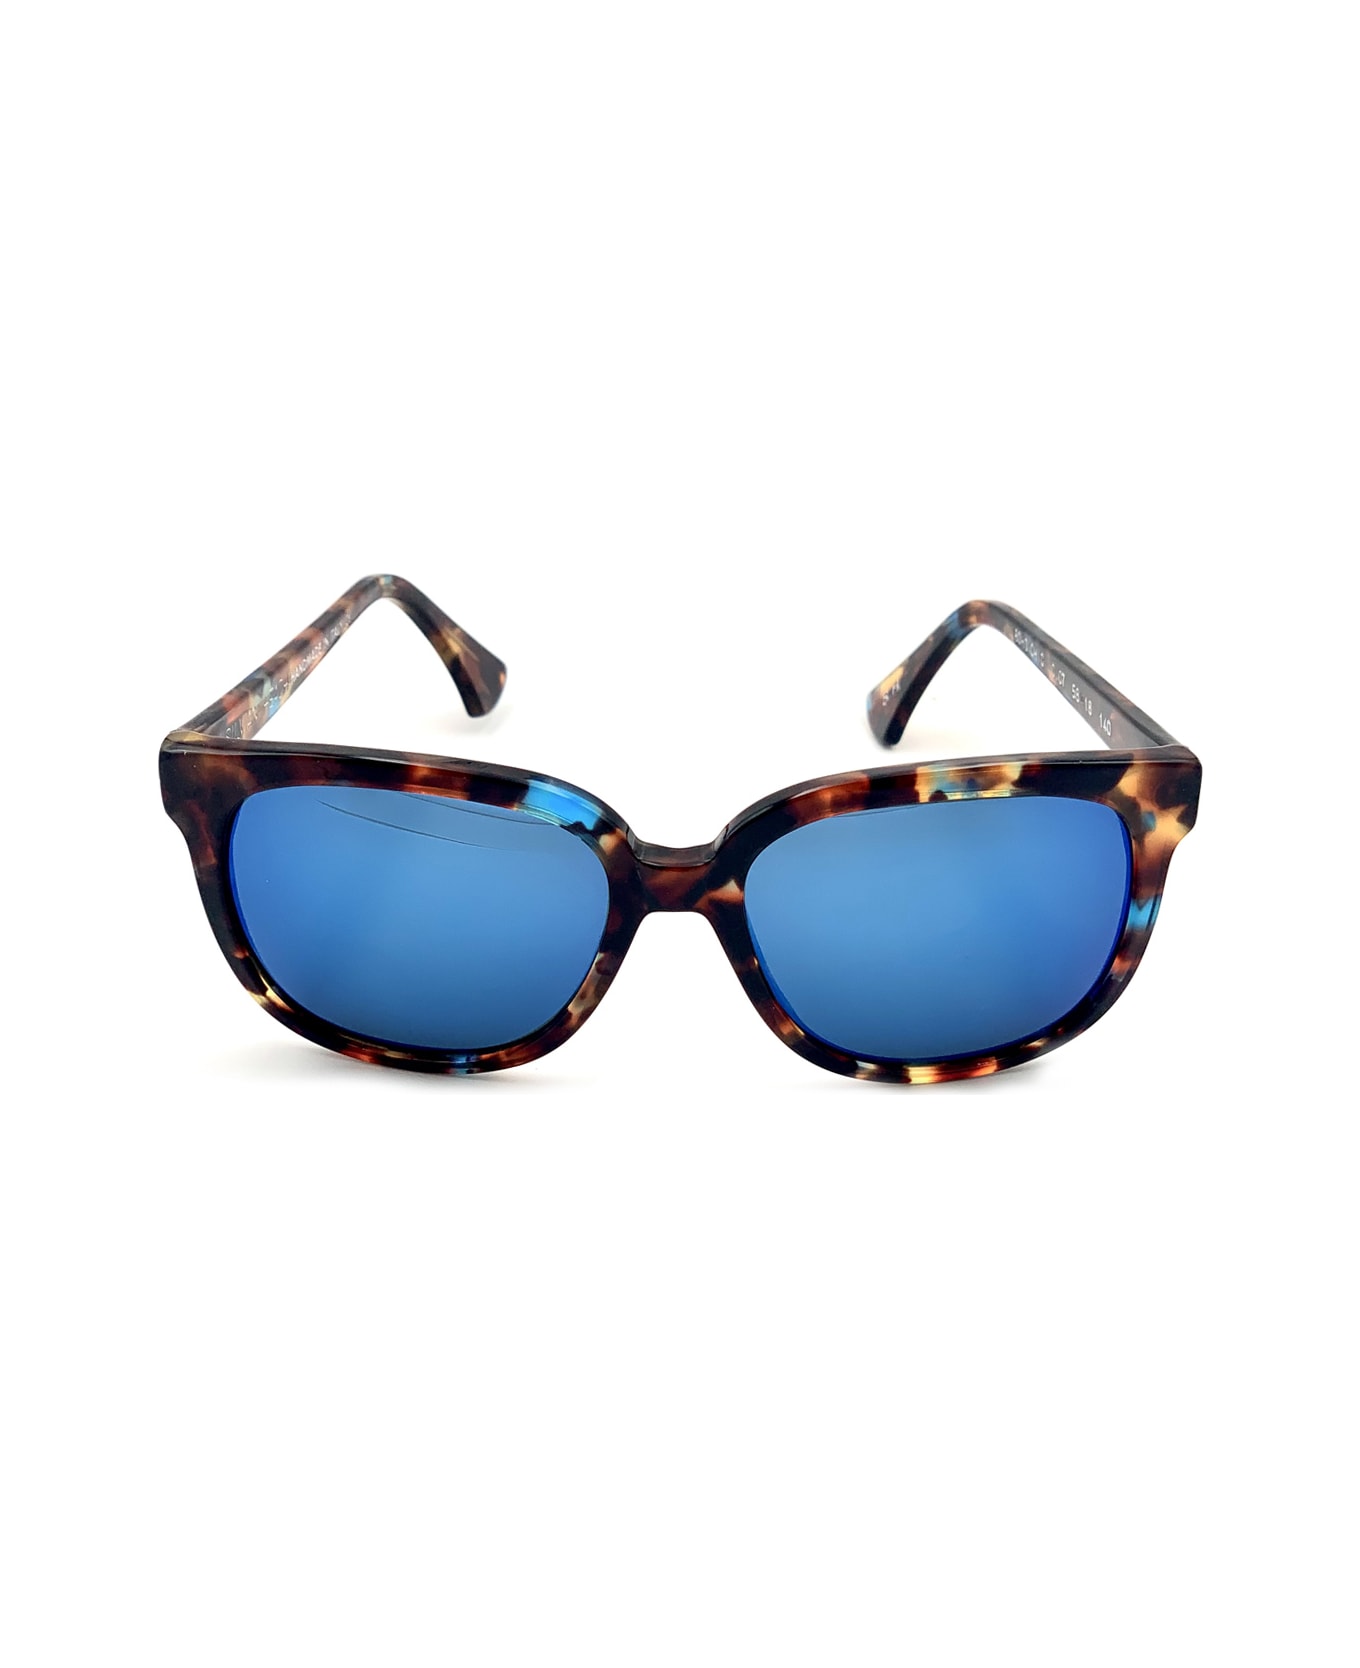 Silvian Heach Boho Chic Sunglasses - Multicolore サングラス